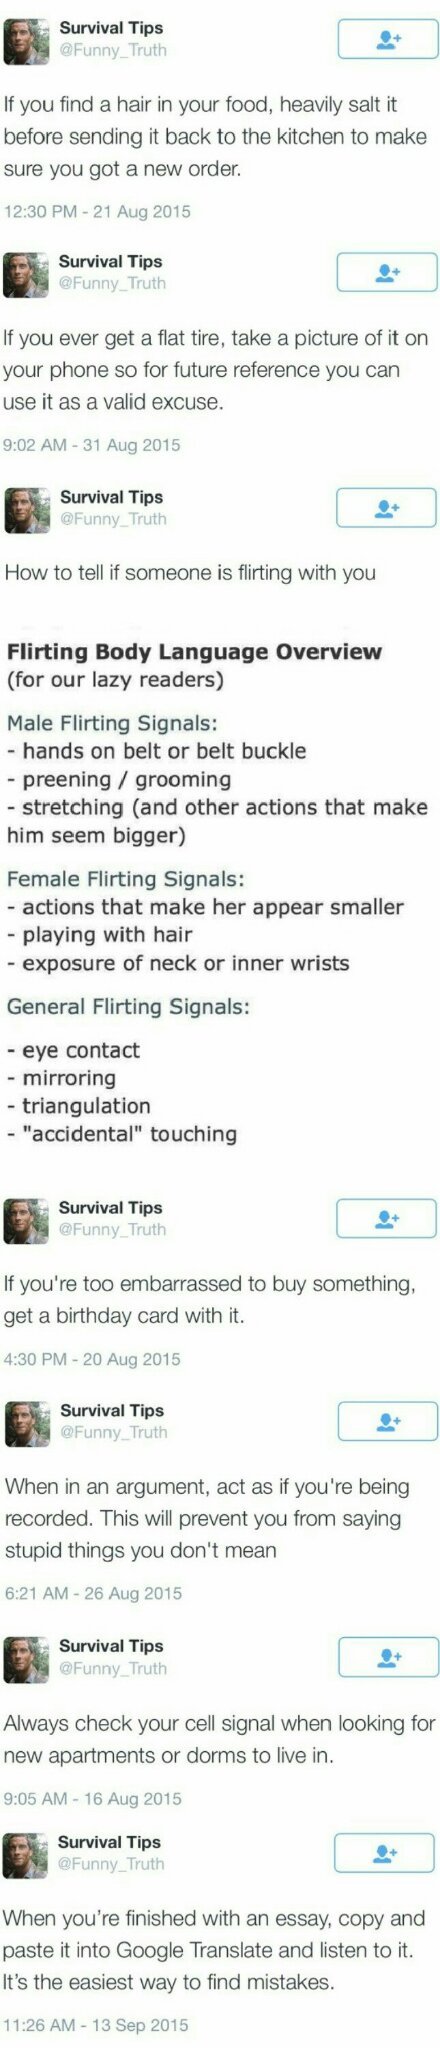 Survival tips - meme